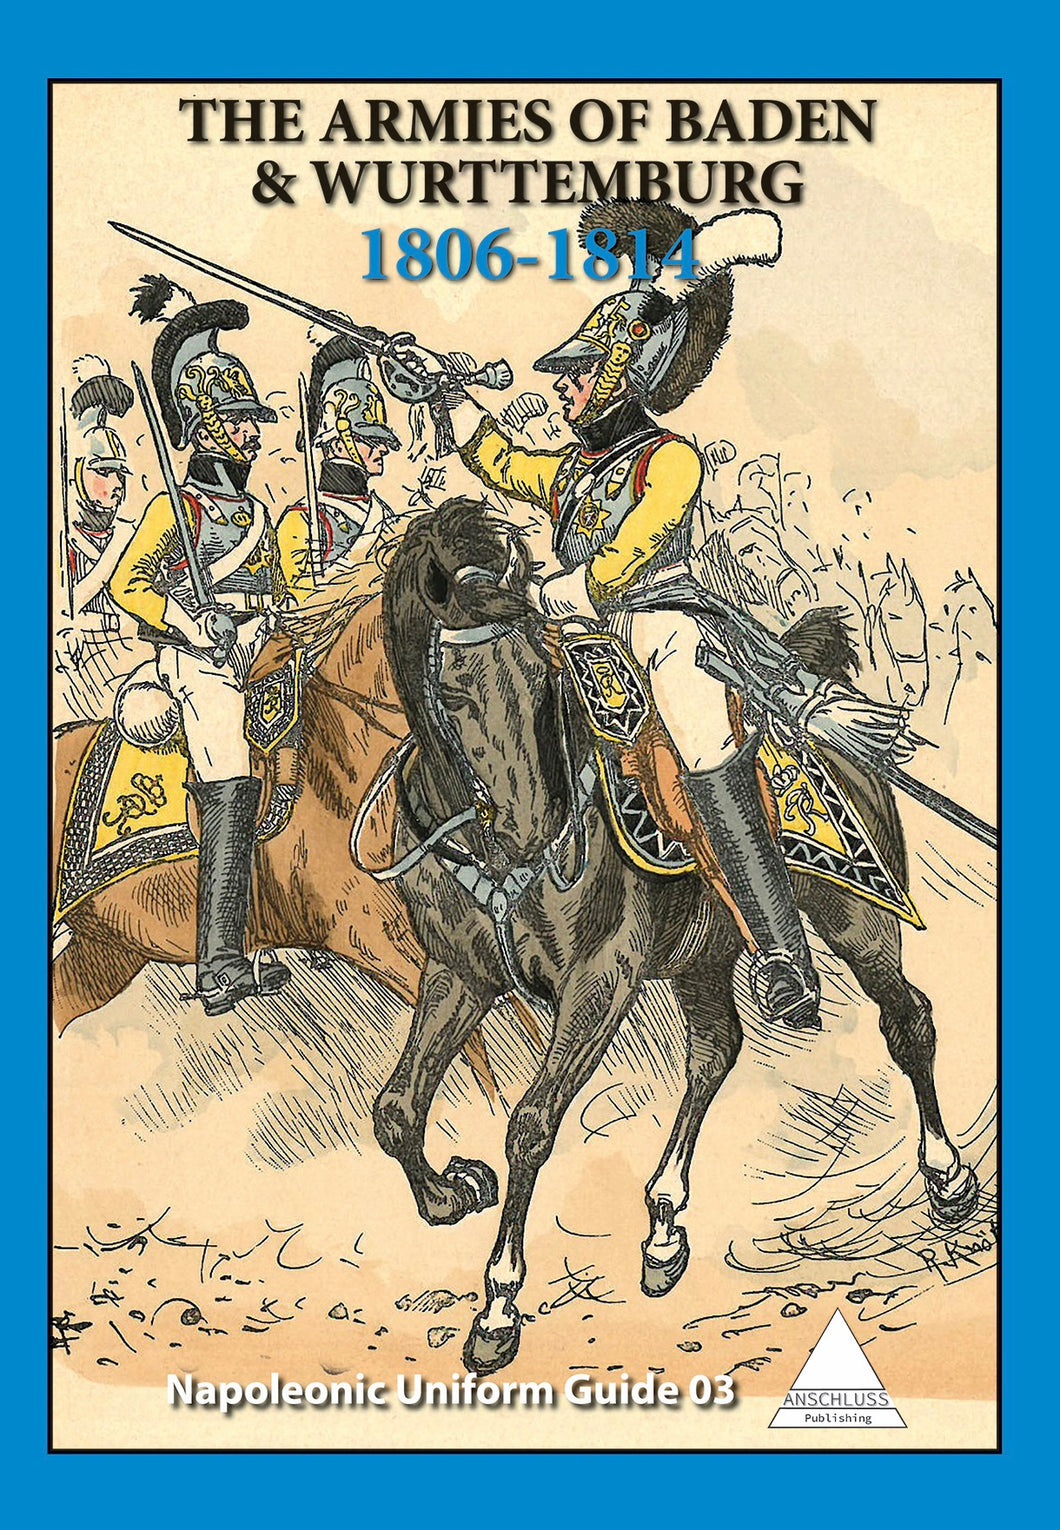 The Napoleonic uniform guide 03 - Baden Wurttemburg